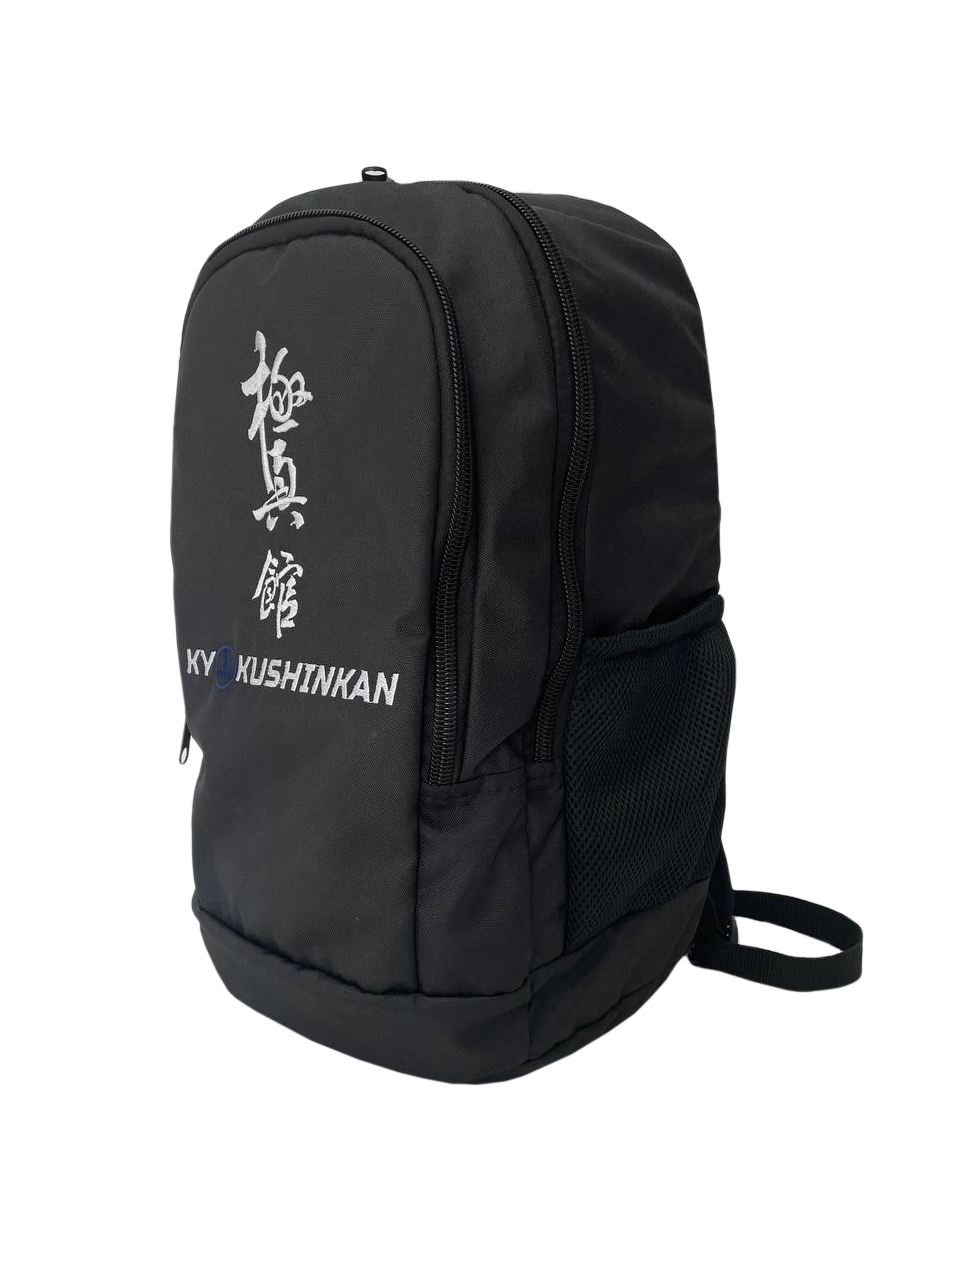 Сумки / Рюкзаки Рюкзак BFS - KYOKUSHIN KAN kan_backpack.jpg